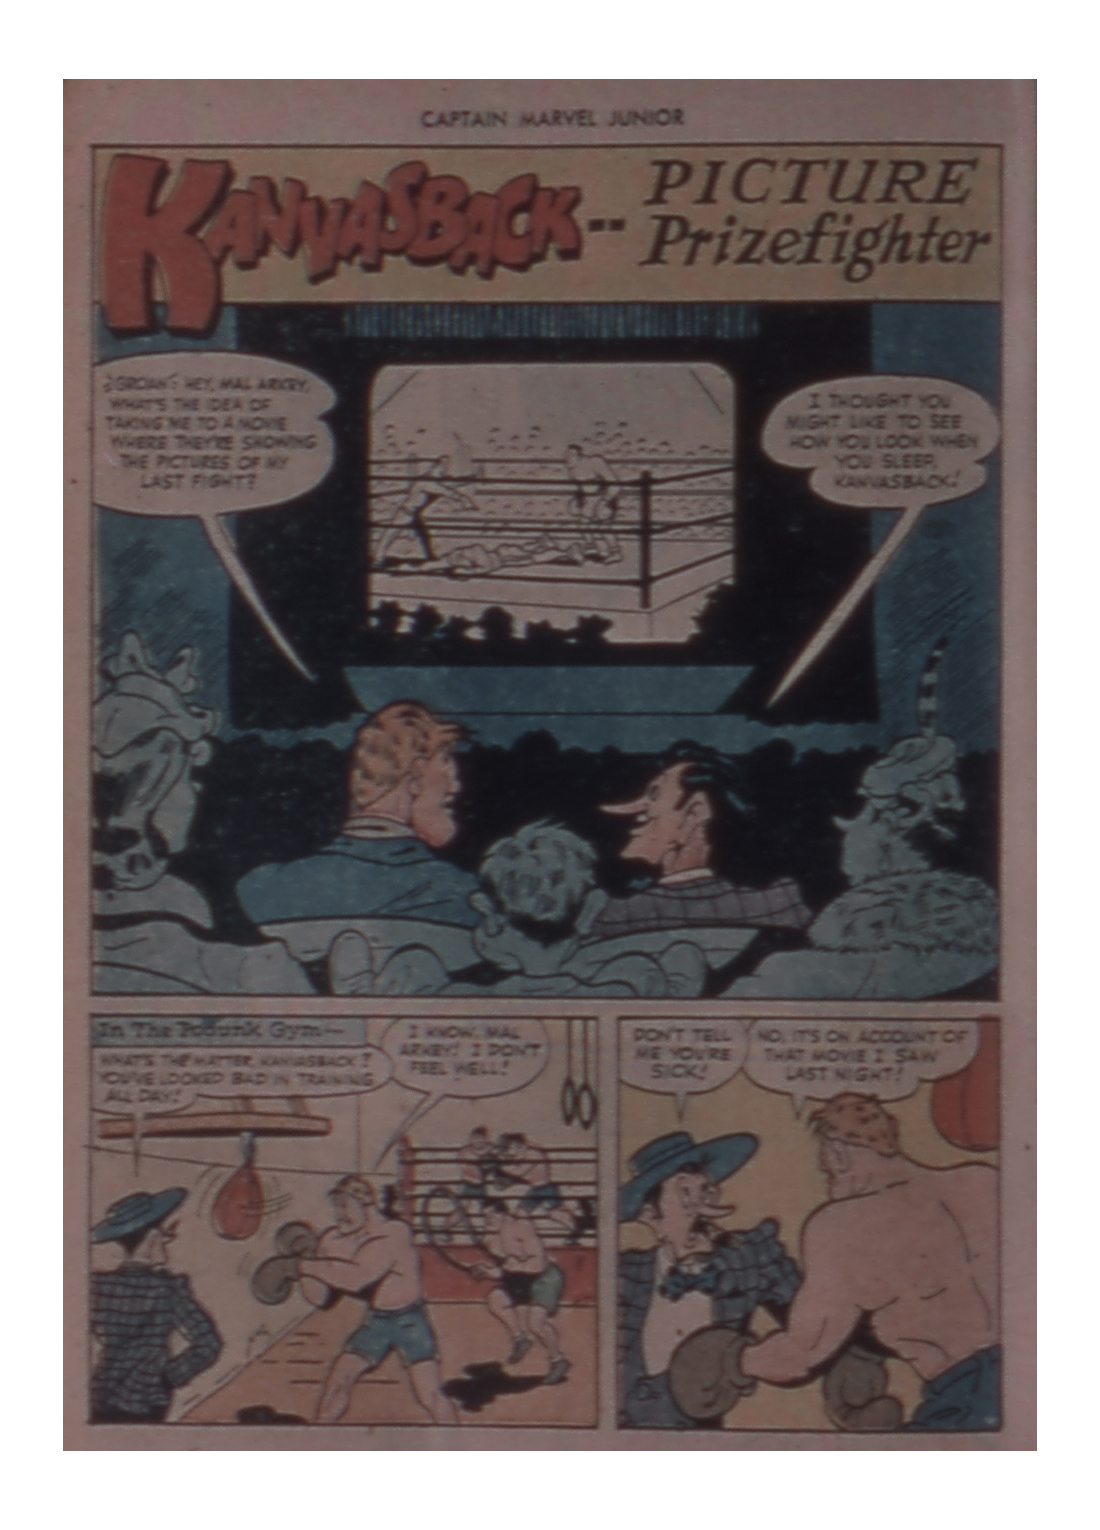 Read online Captain Marvel, Jr. comic -  Issue #73 - 34